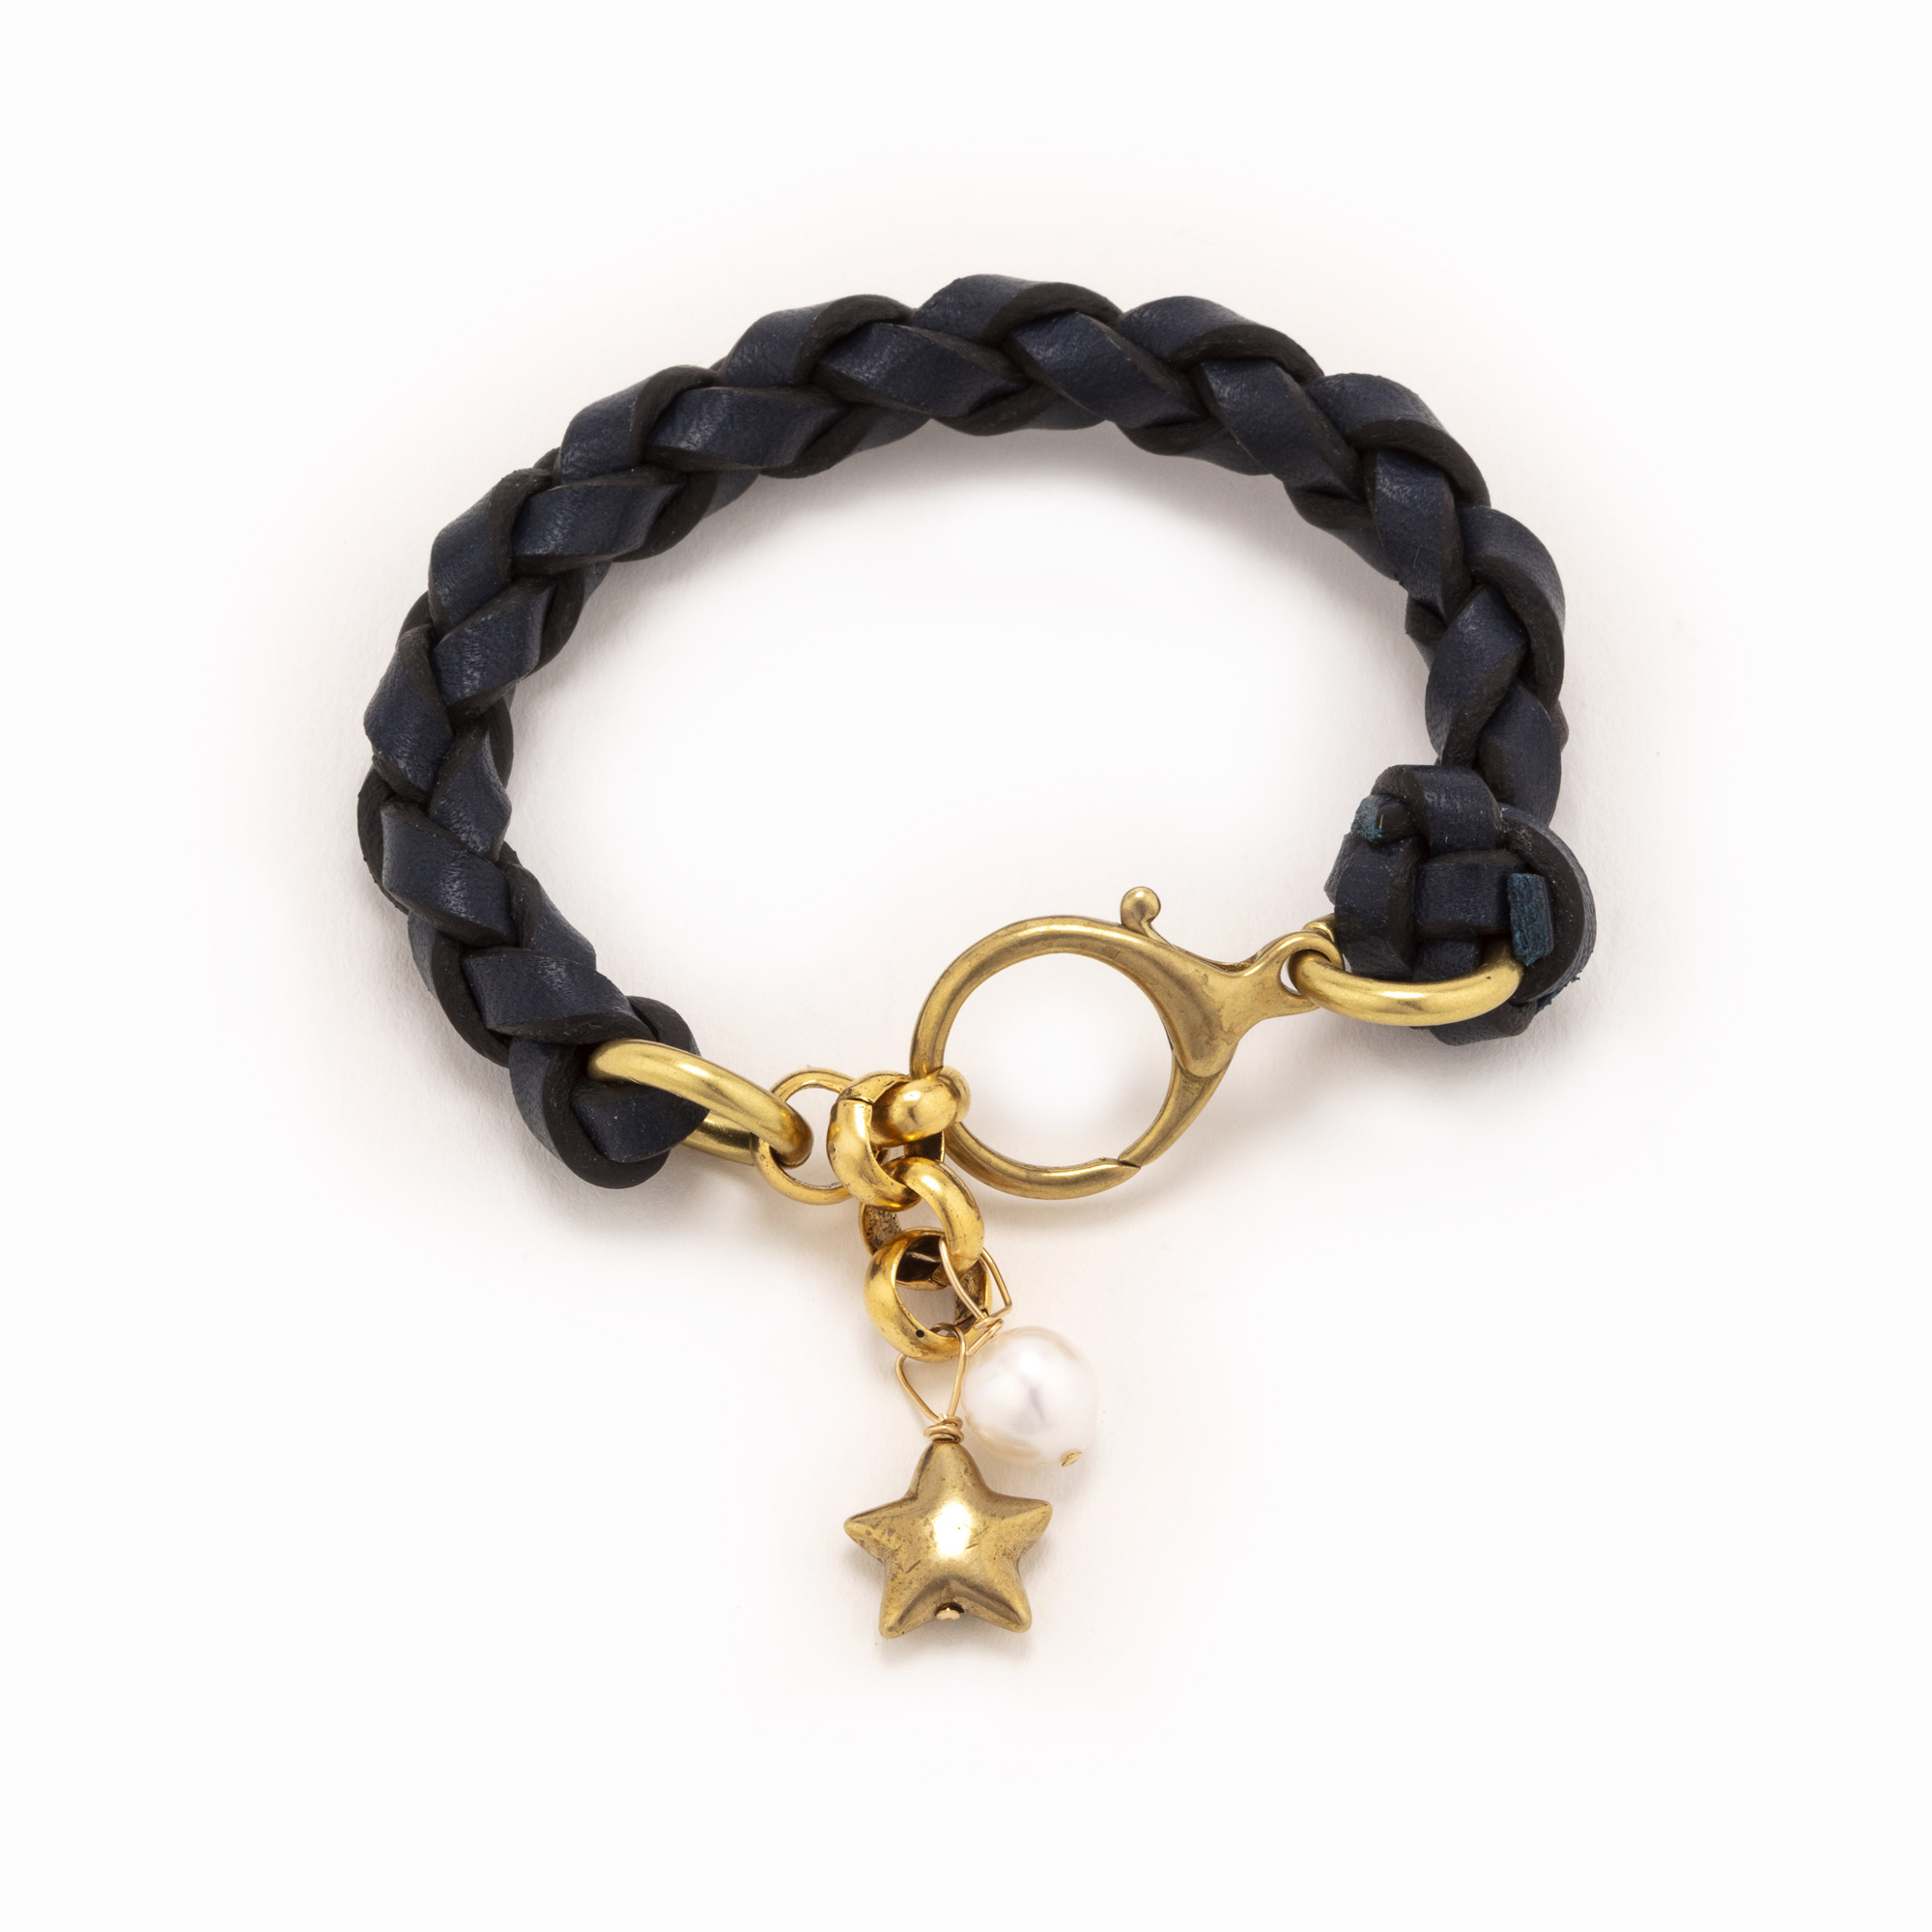 Featured image for “Bono Italian Leather Bracelet”